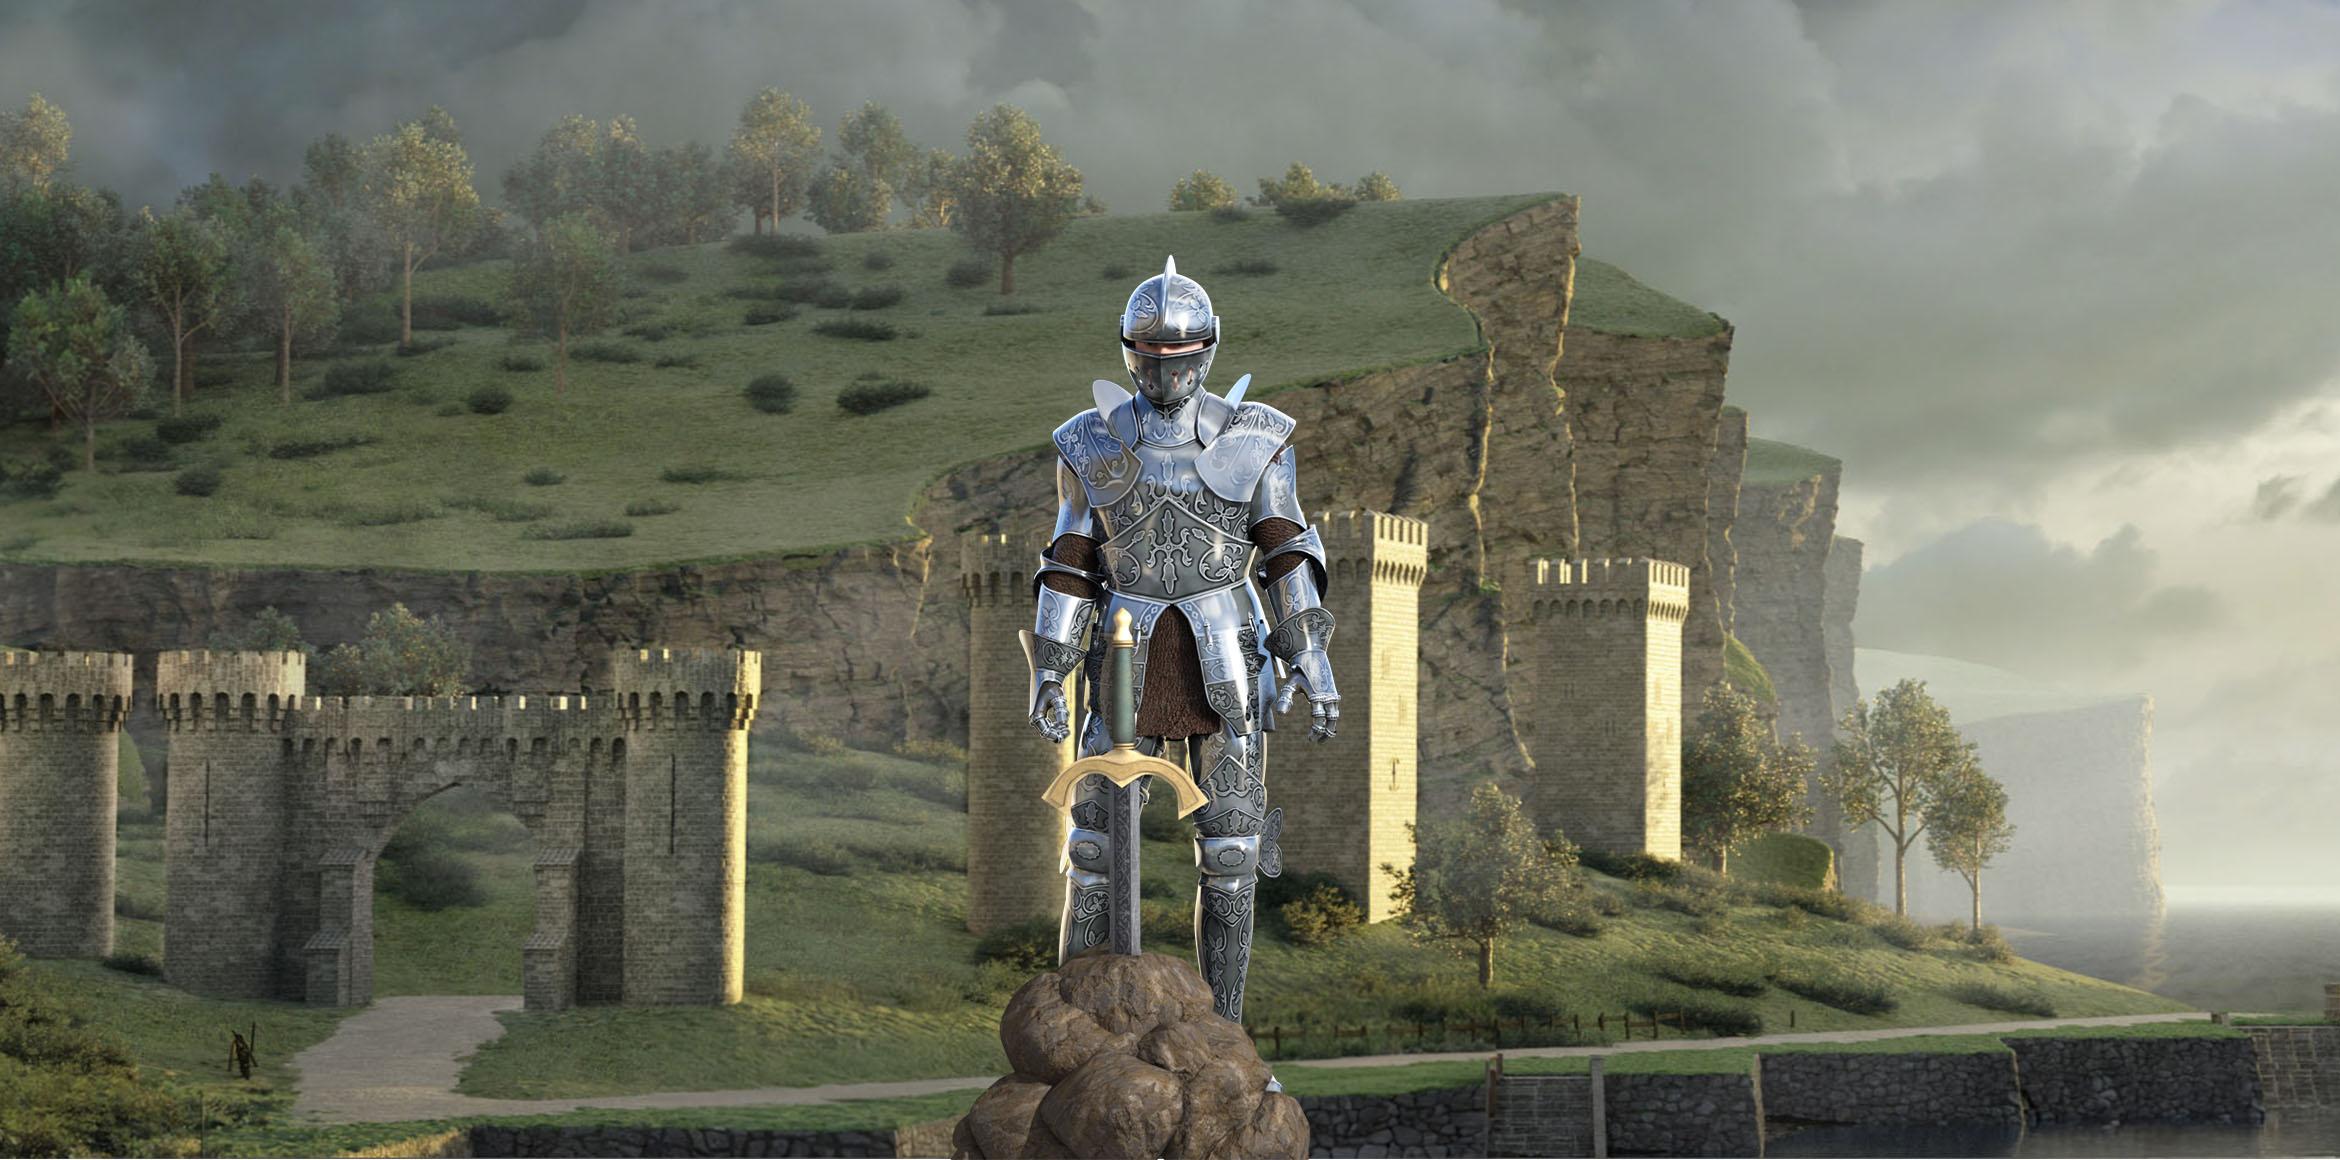 Jewel Match Origins 3 - Camelot Castle Collector's Edition